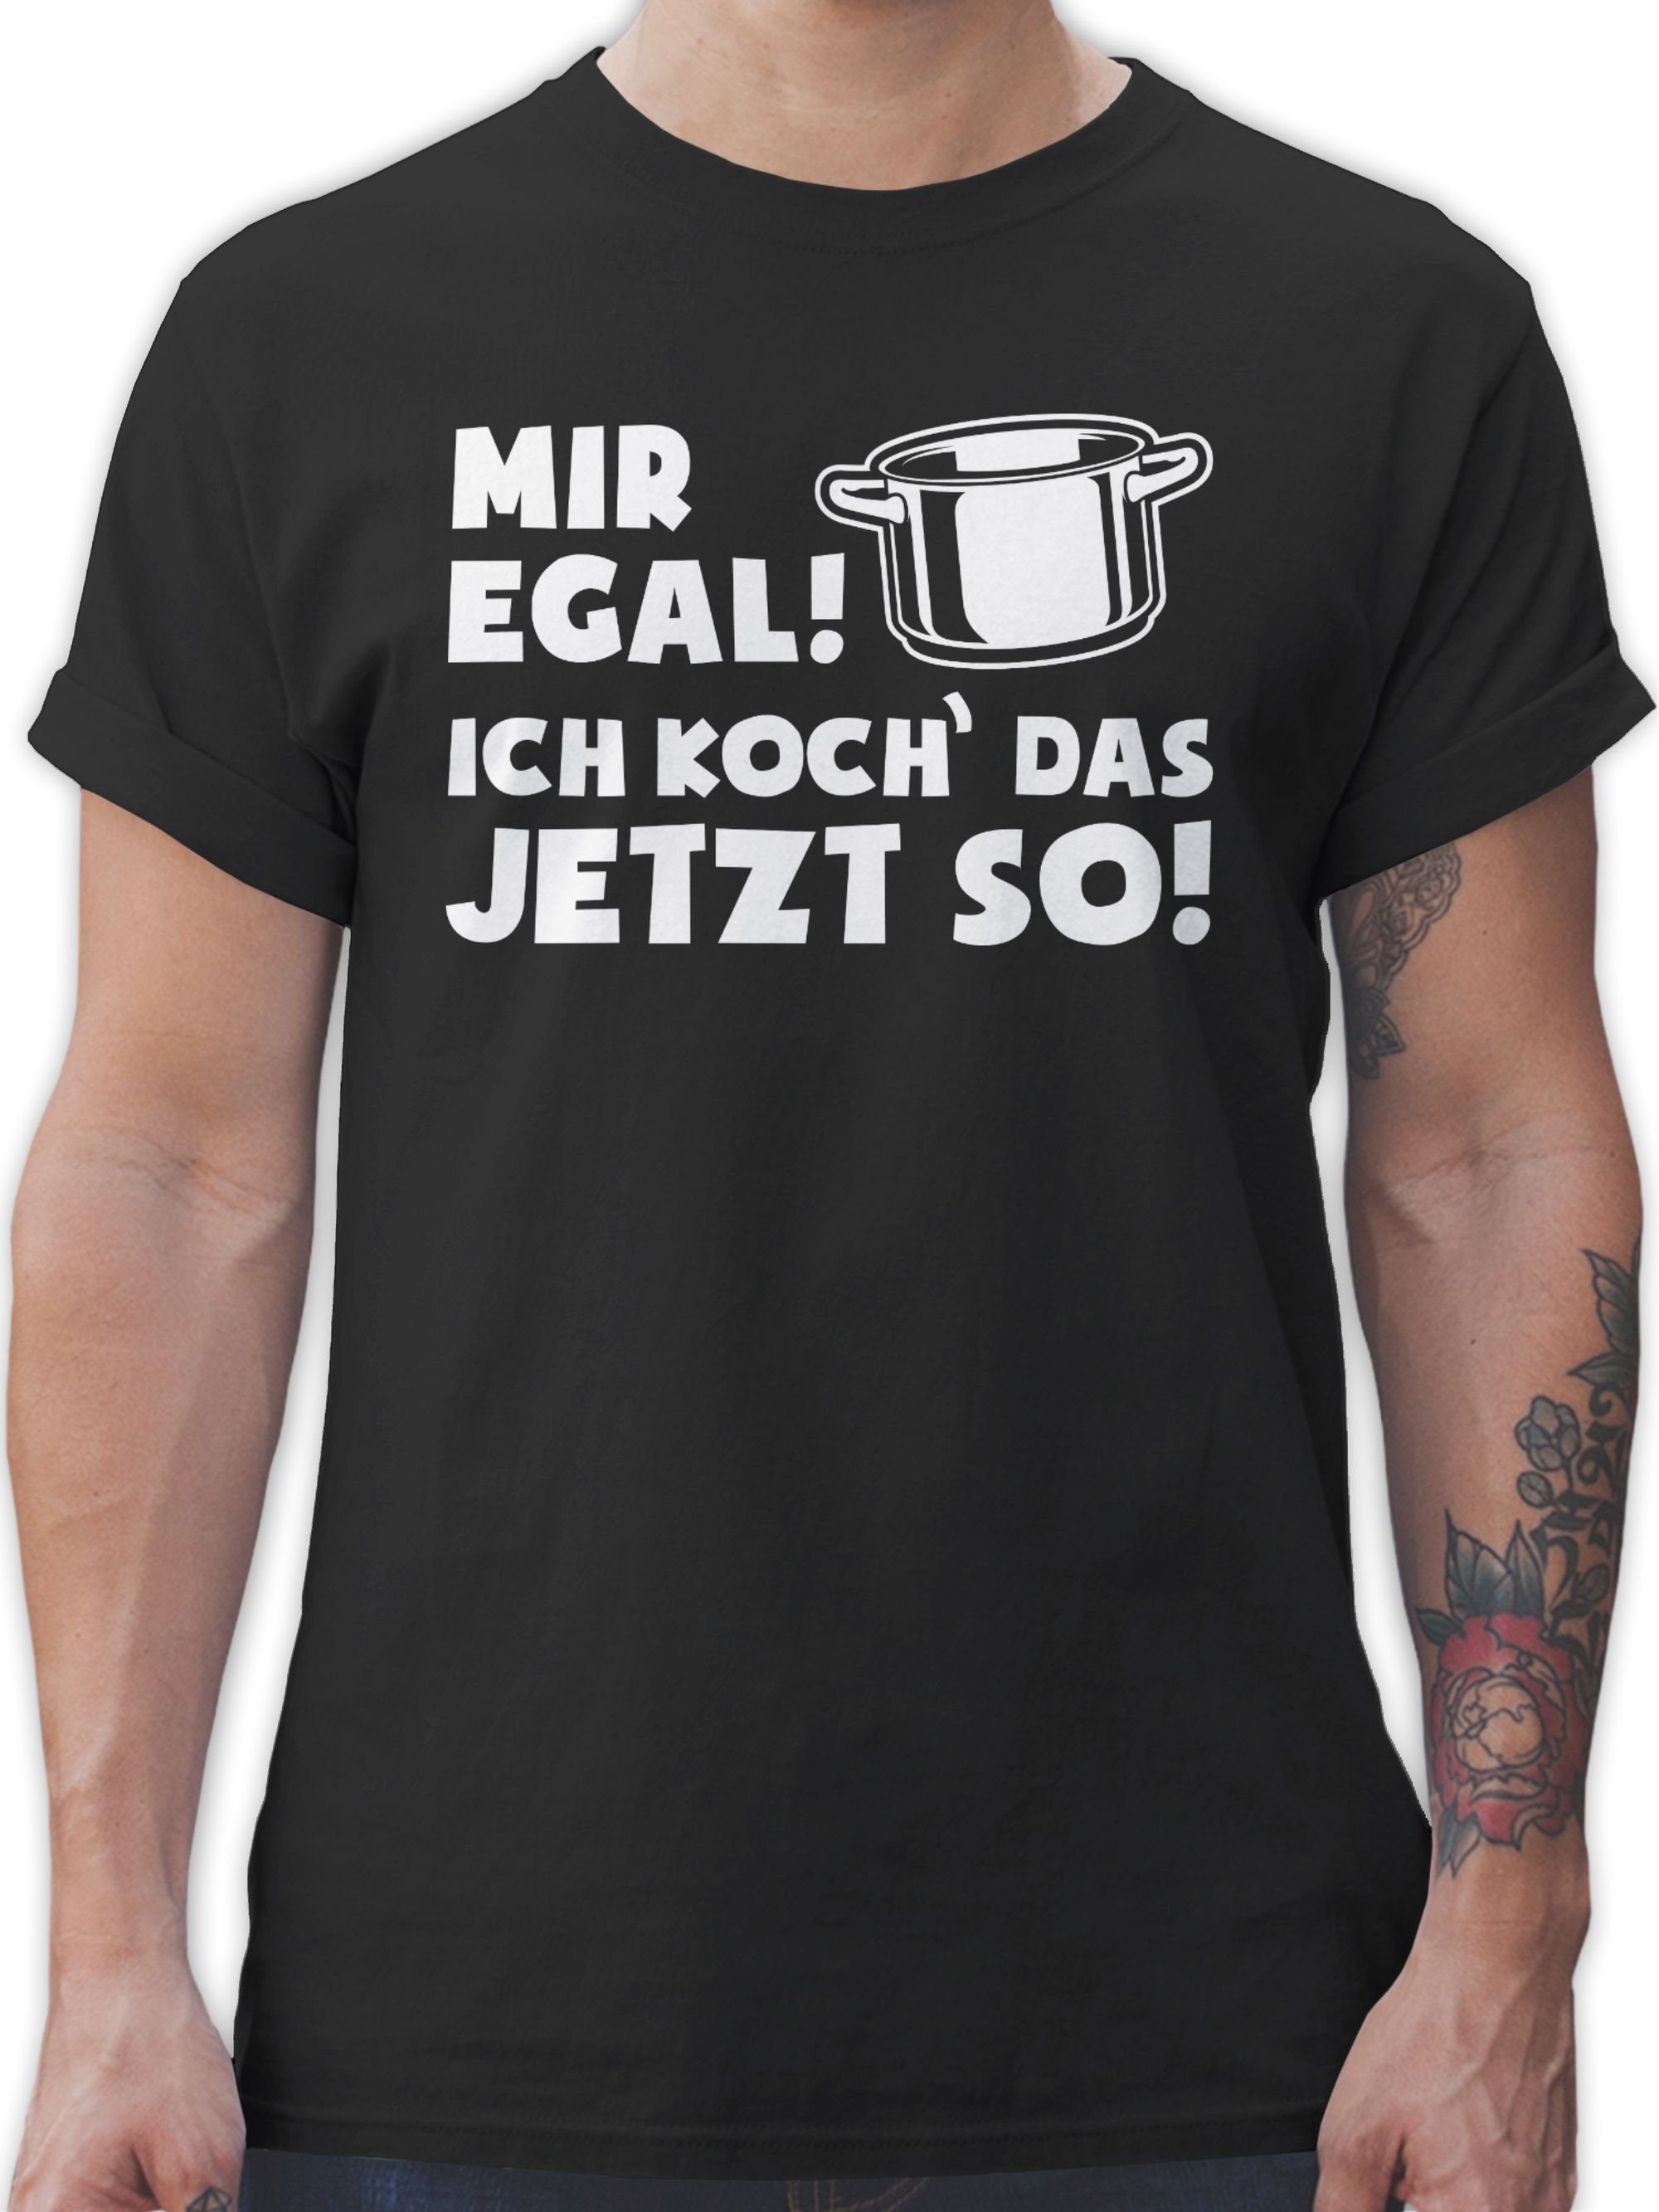 Küche Shirtracer Schwarz egal so jetzt T-Shirt das Mir koch ich 03